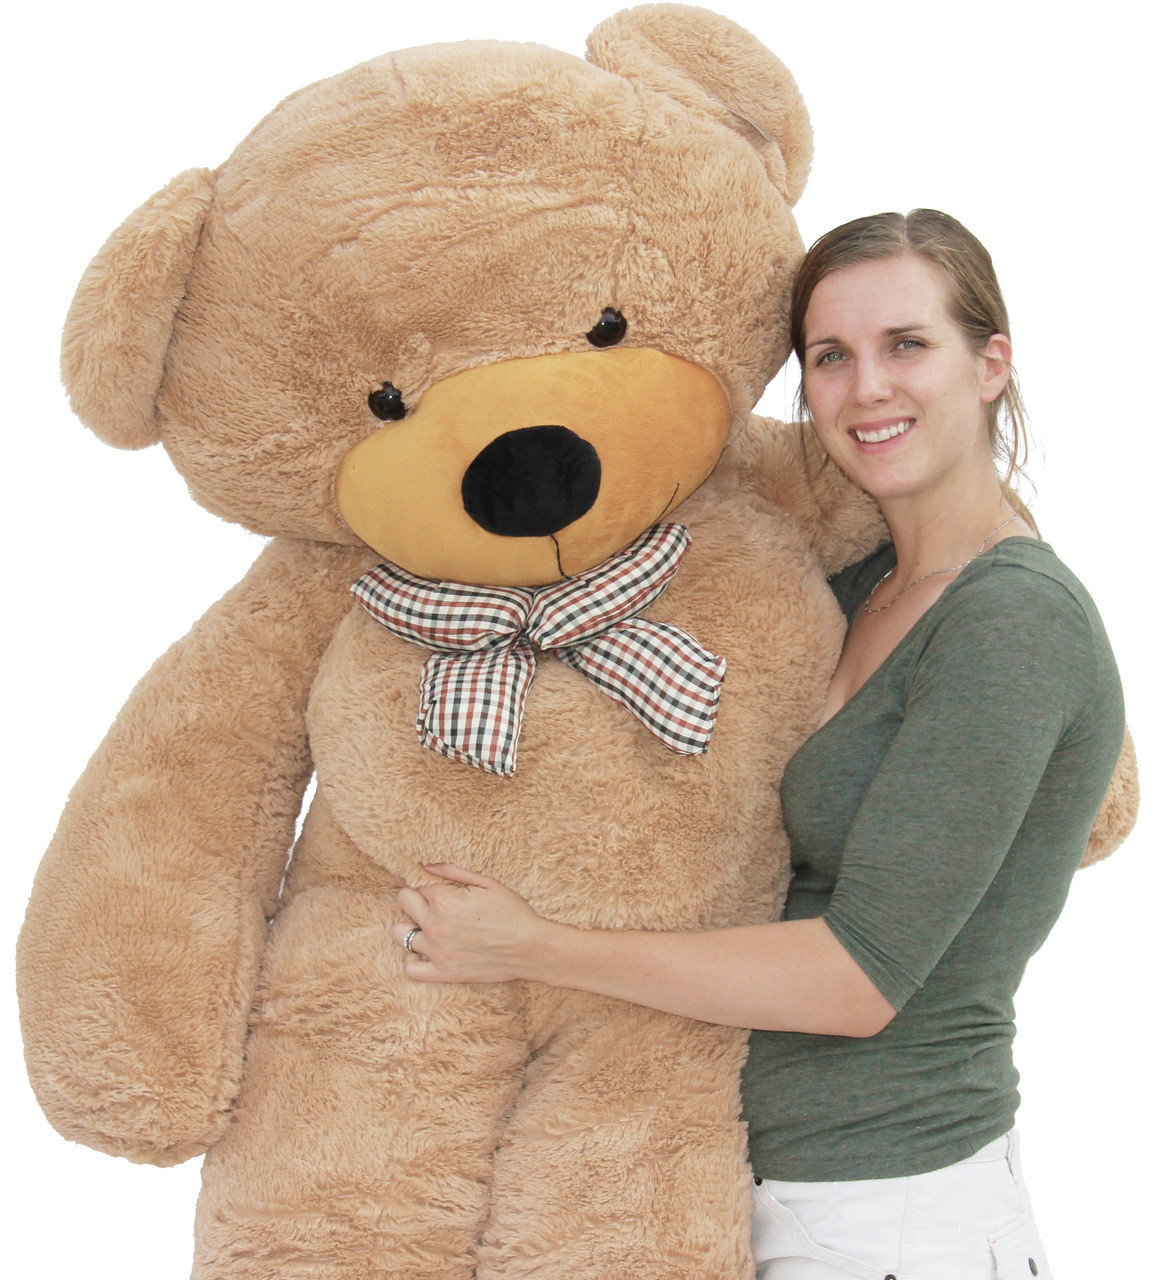 6 foot tall teddy bear